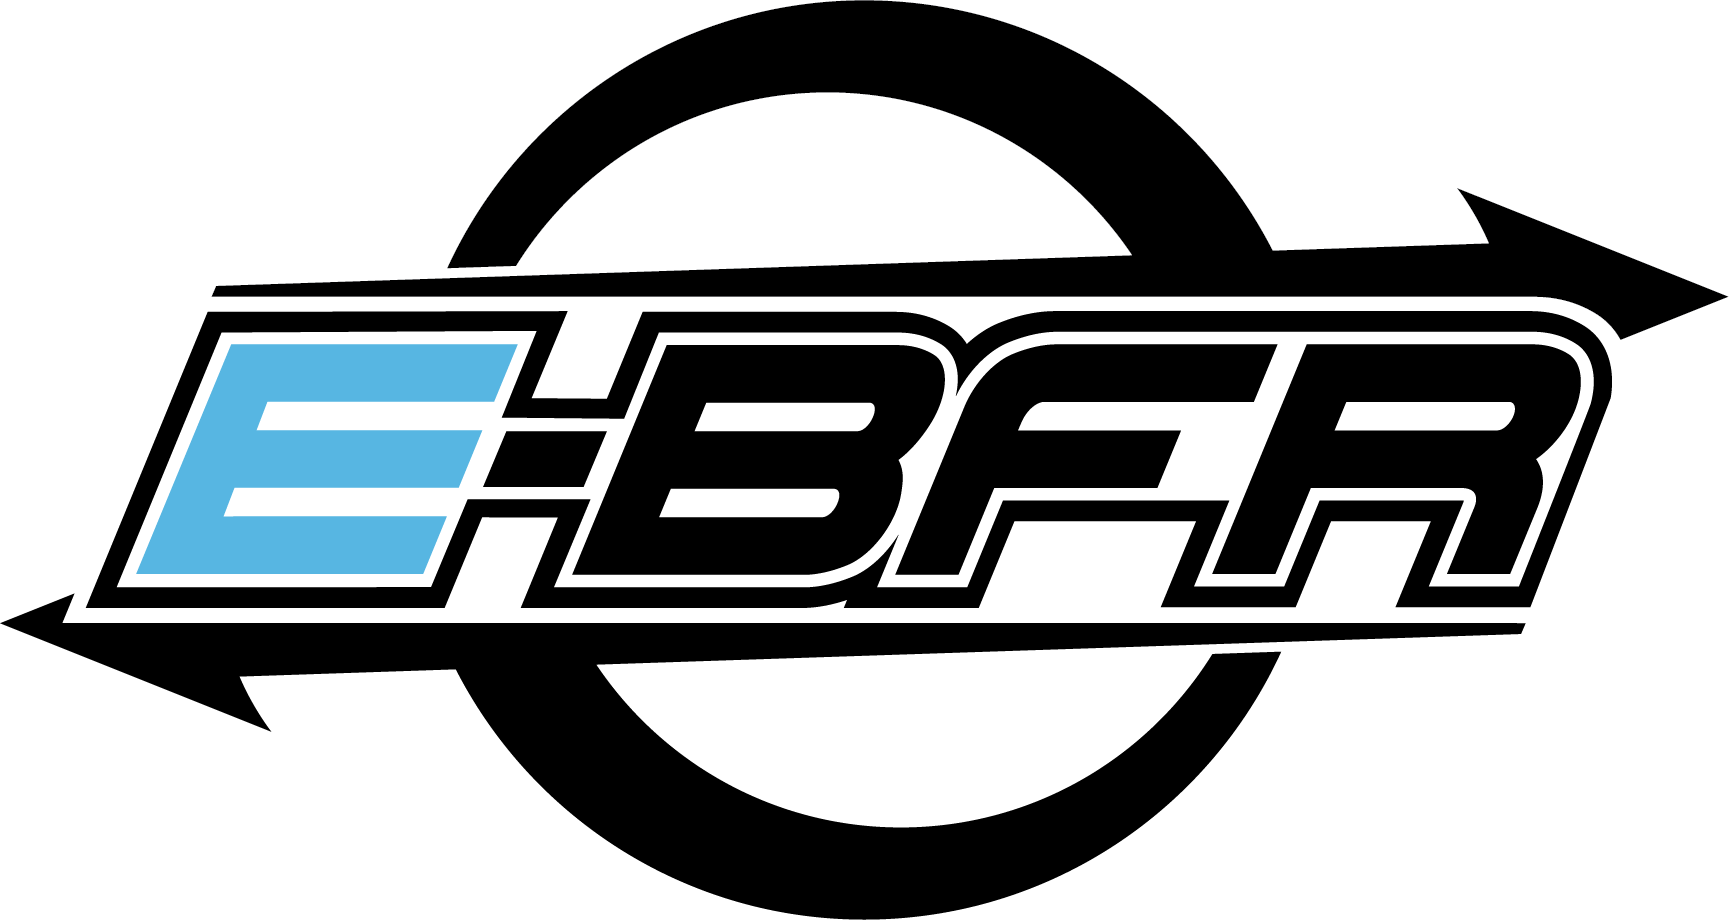 E-BFR_logo_new.png